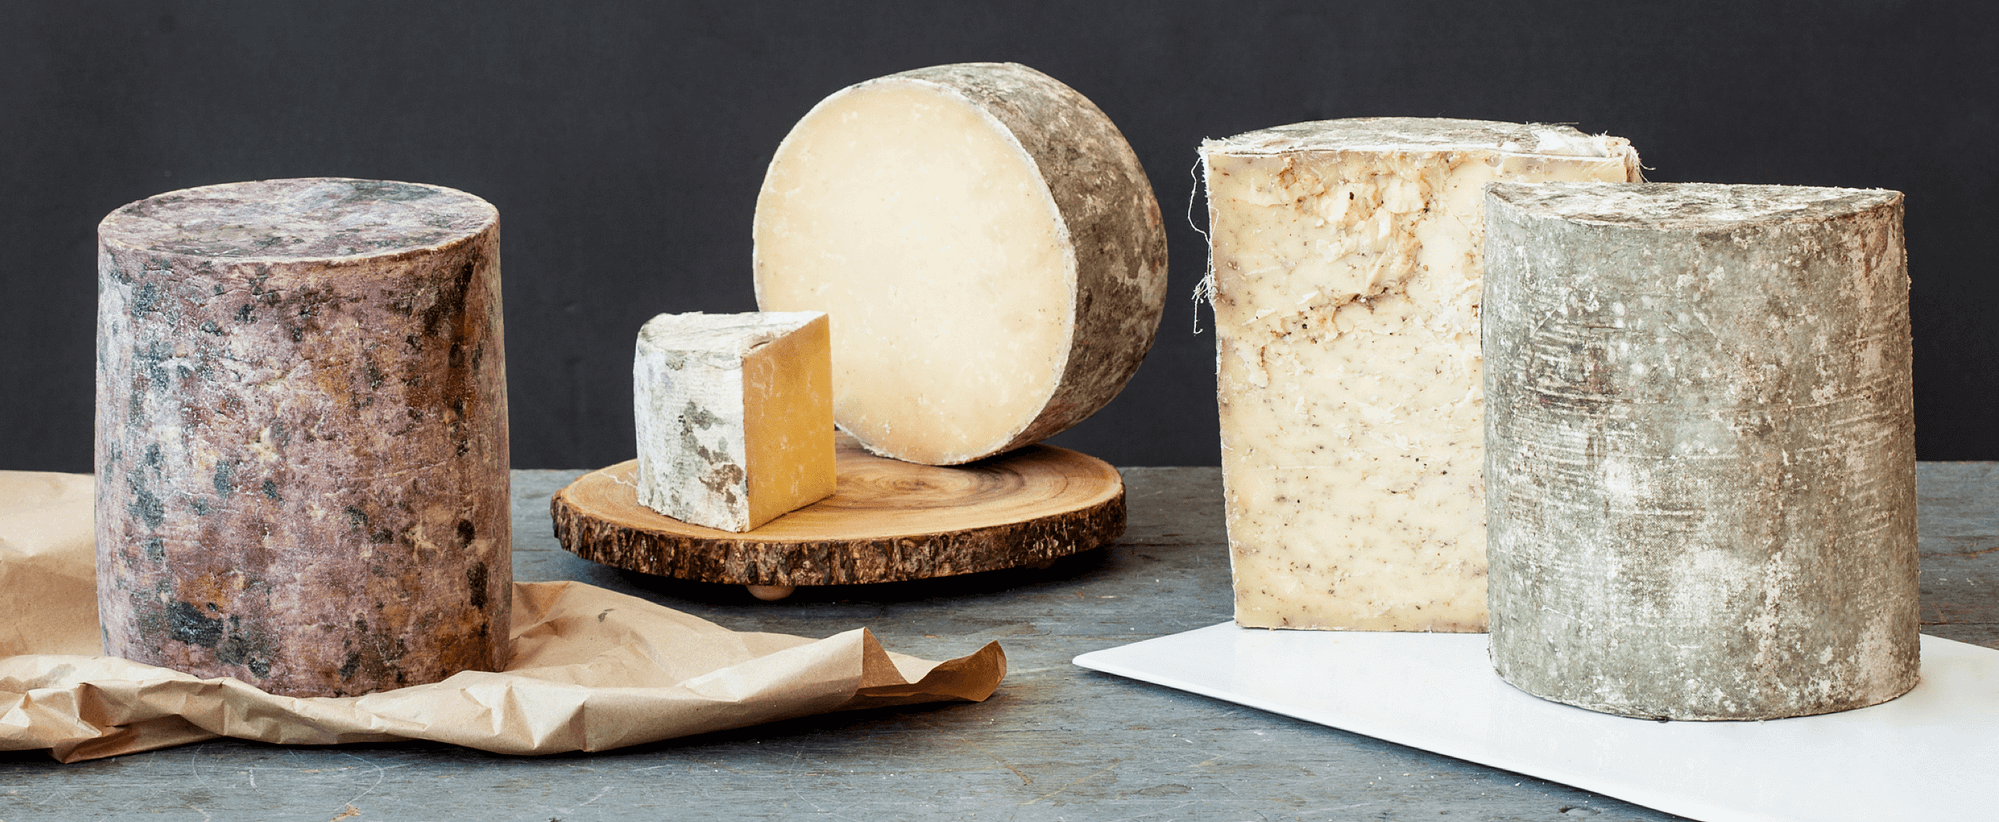 A beautiful display of artisan cheeses